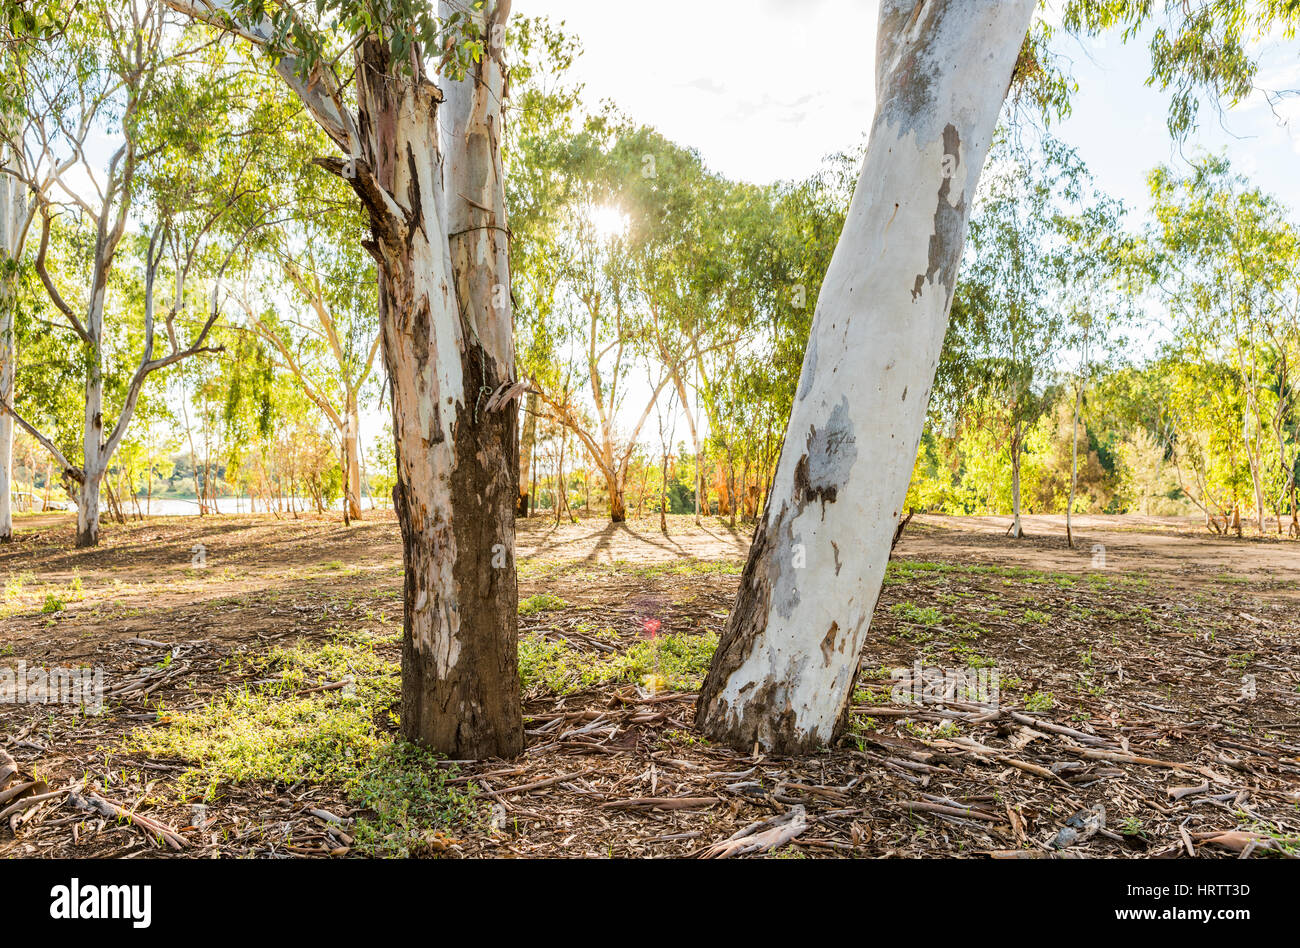 Eucalyptus or gum trees in Queensland, Australia by the banks of the Burdekin River Stock Photo